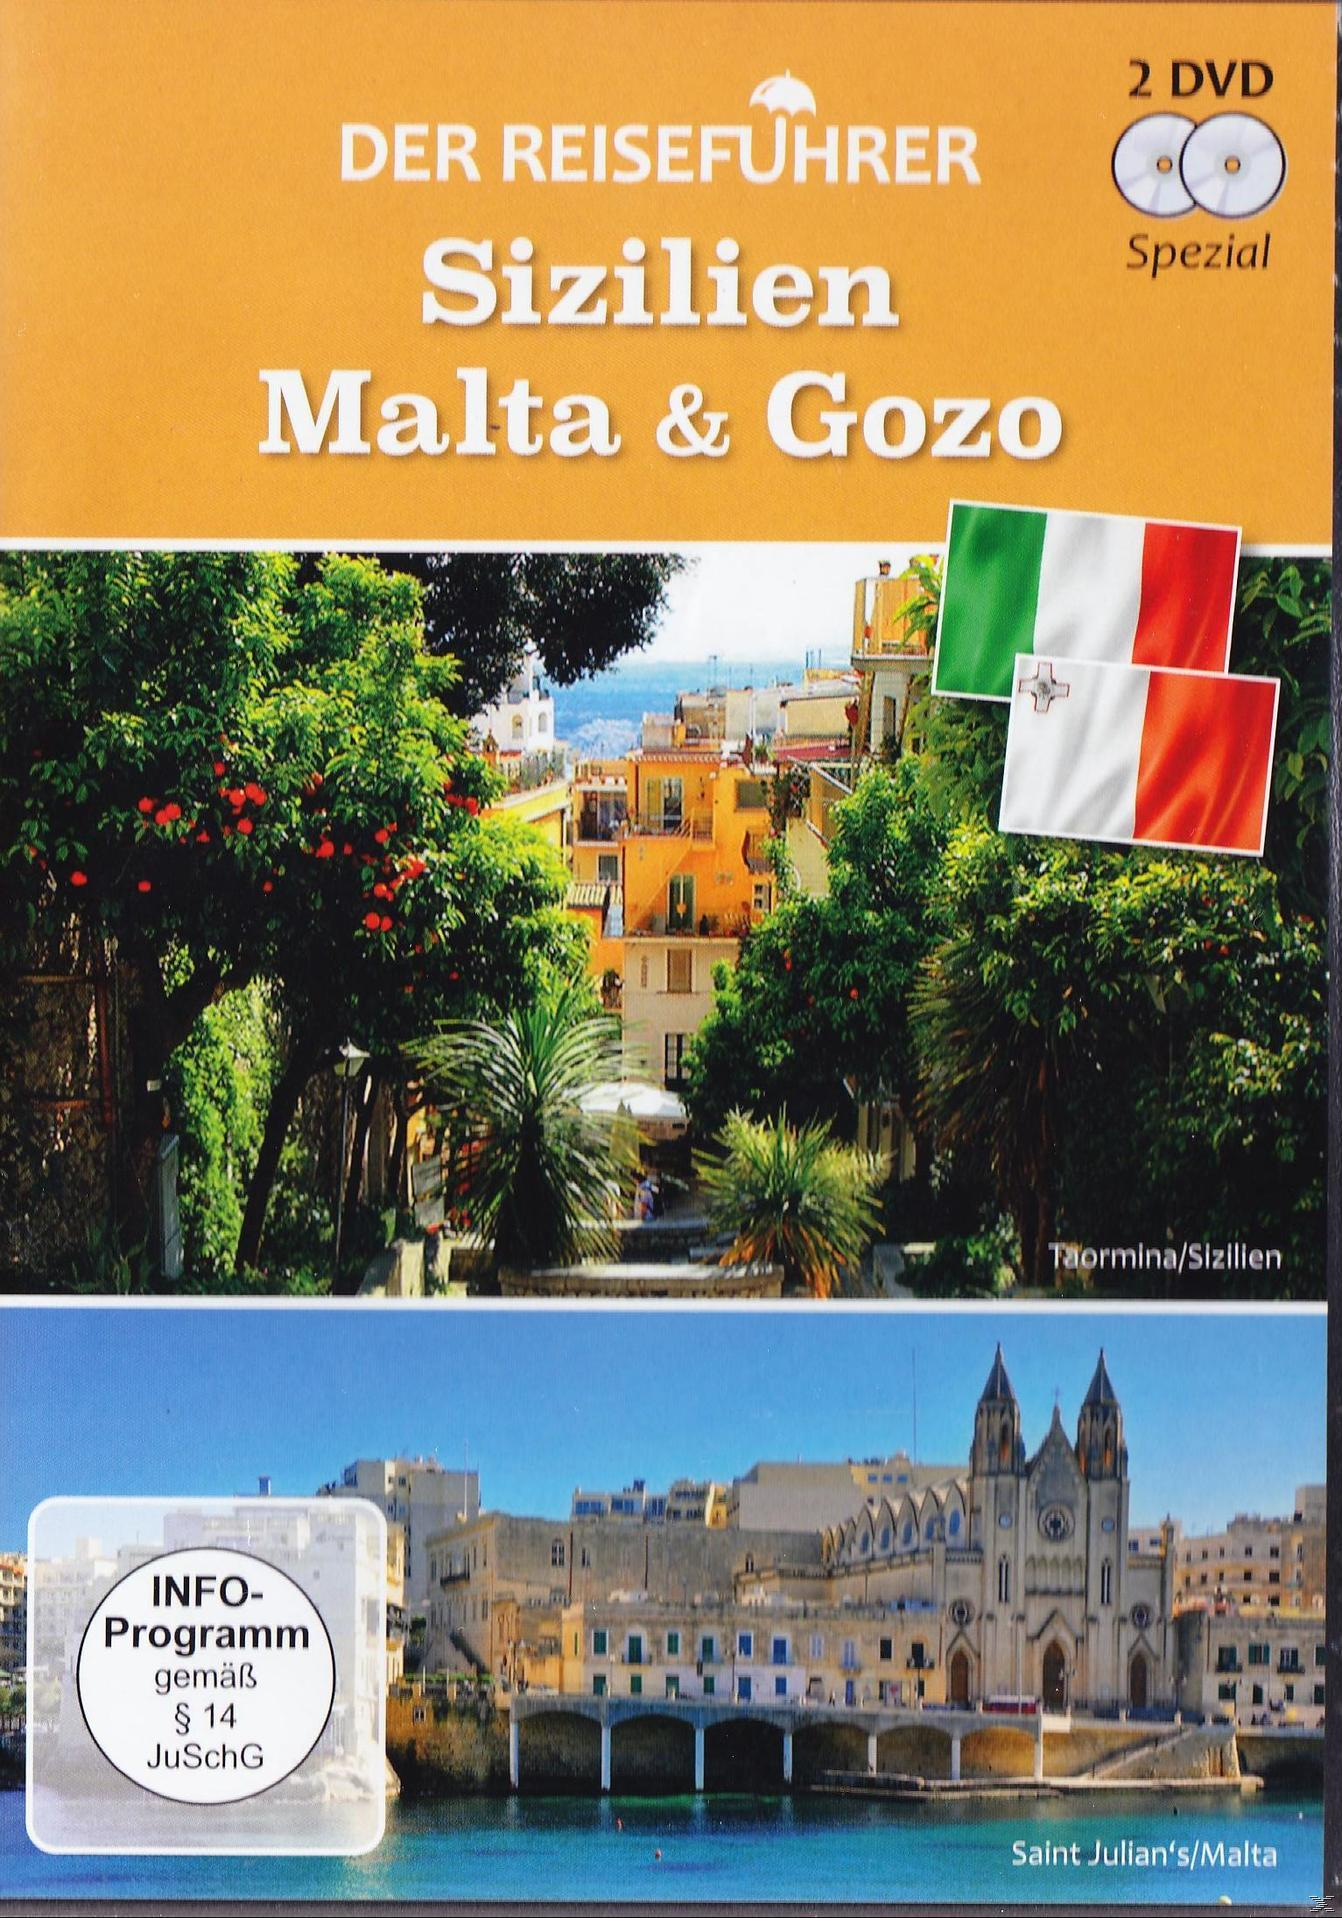 Der Reiseführer - DVD Malta Sizilien, Gozo 